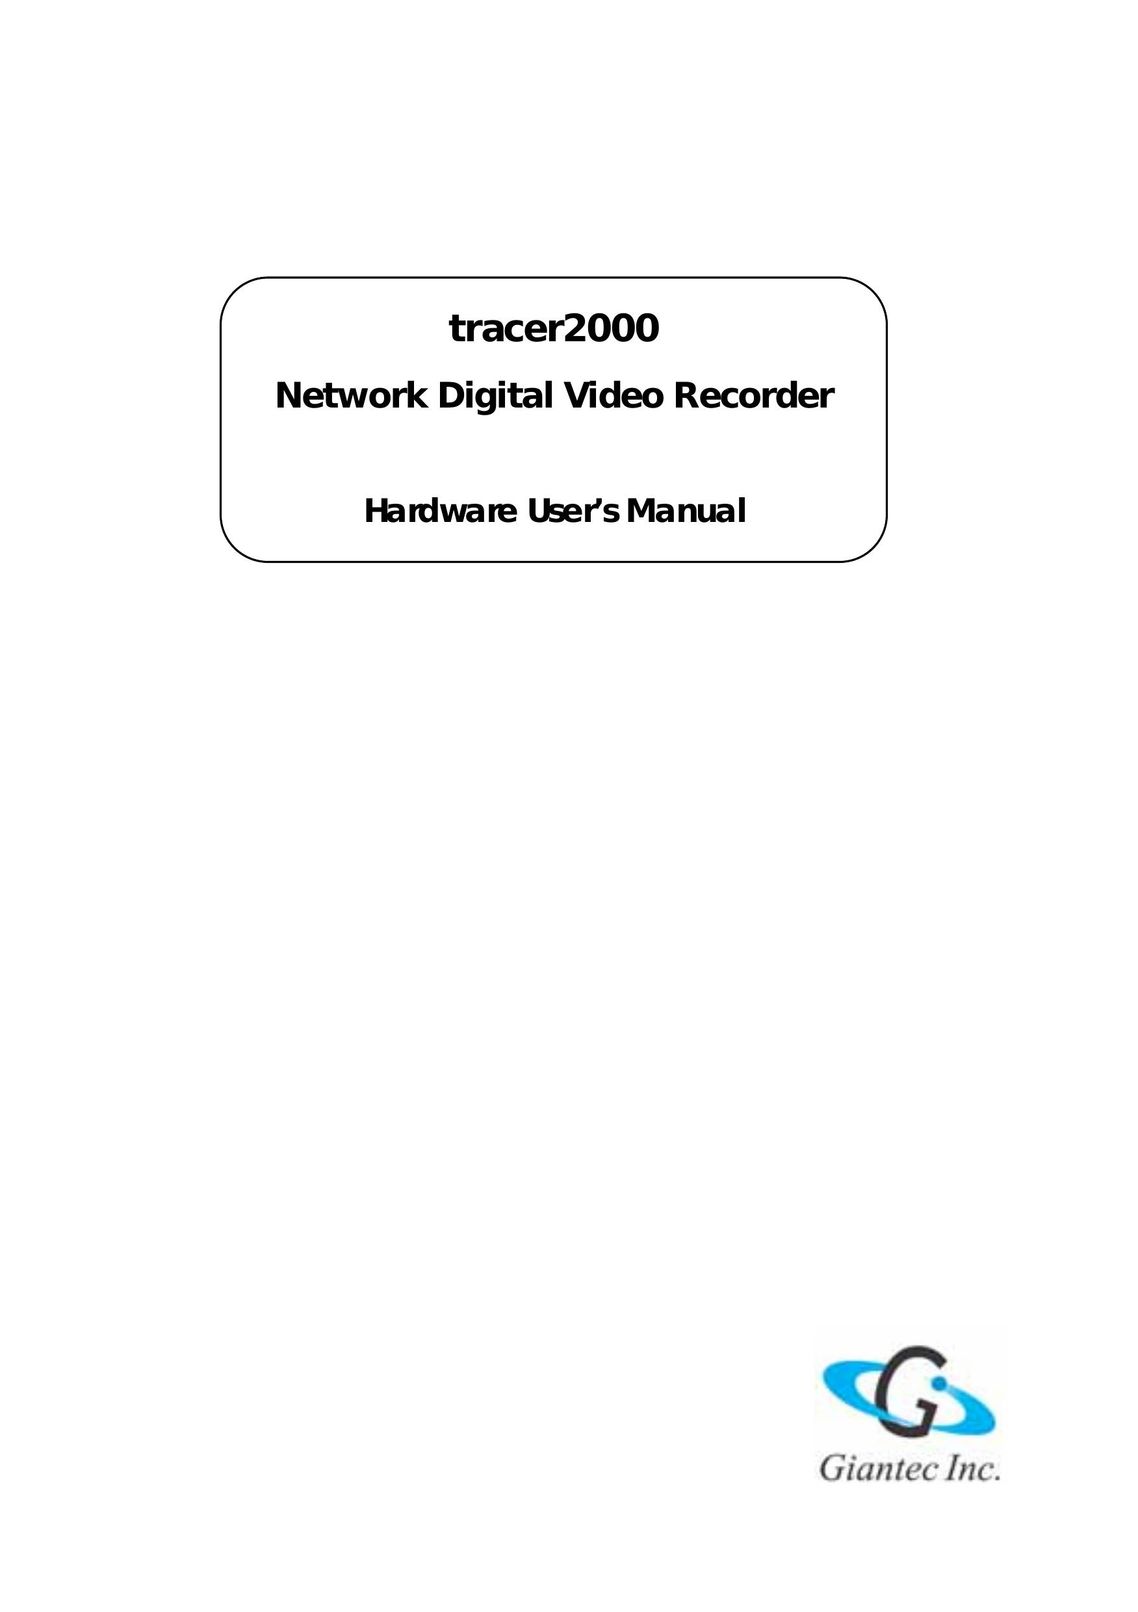 Giantec tracer2000 DVR User Manual